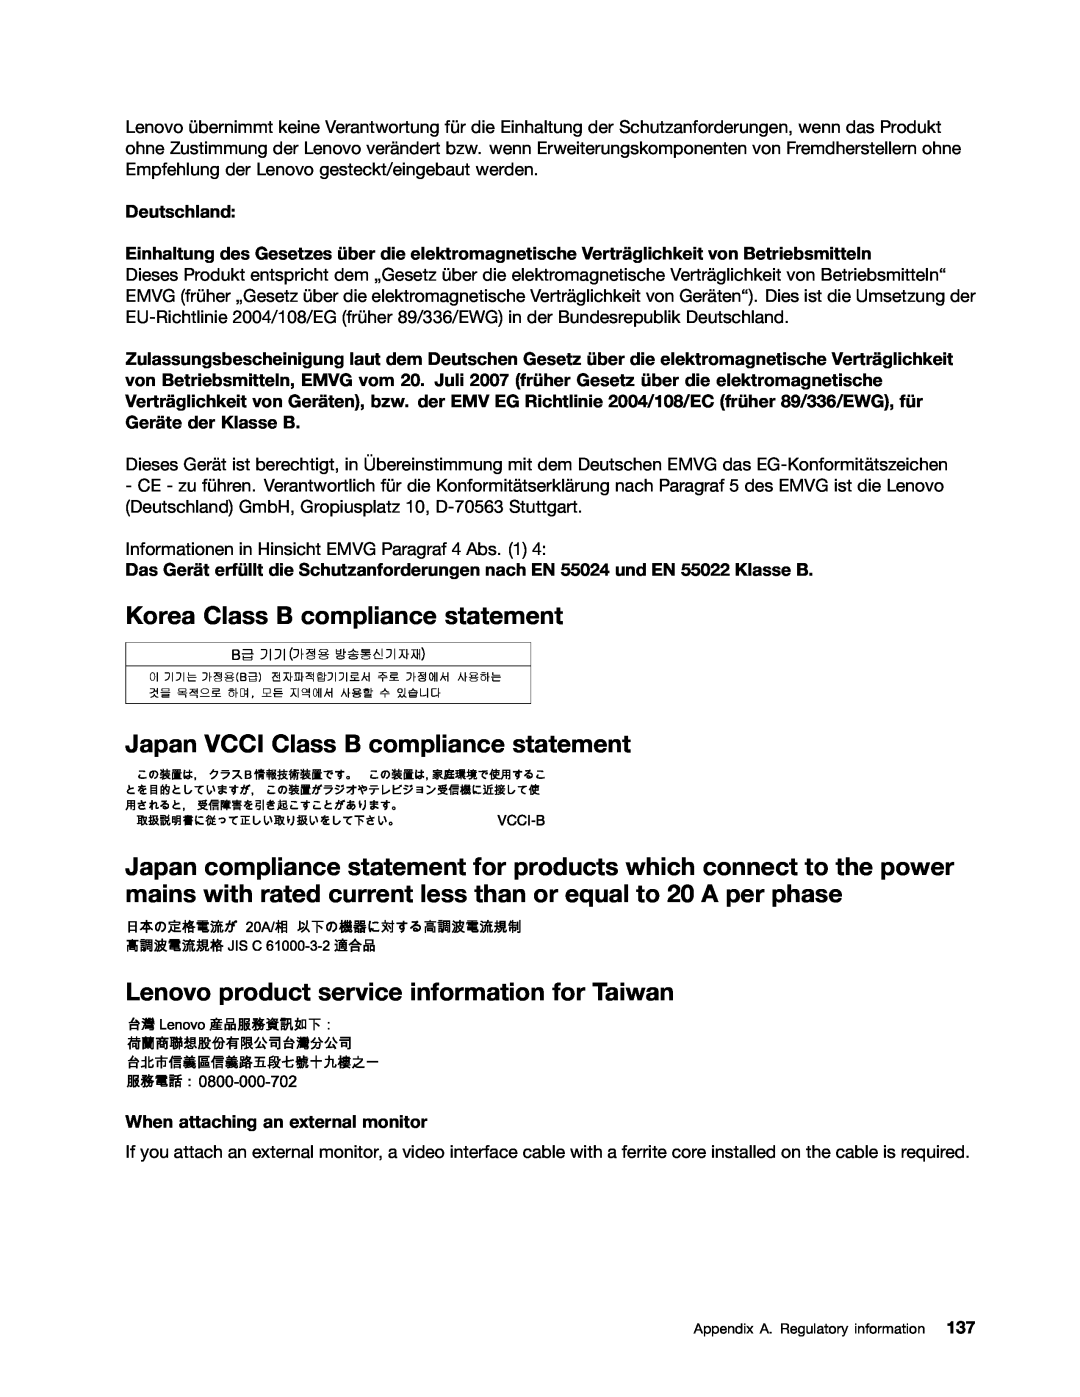 Lenovo X131E manual Korea Class B compliance statement, Japan VCCI Class B compliance statement, Deutschland 